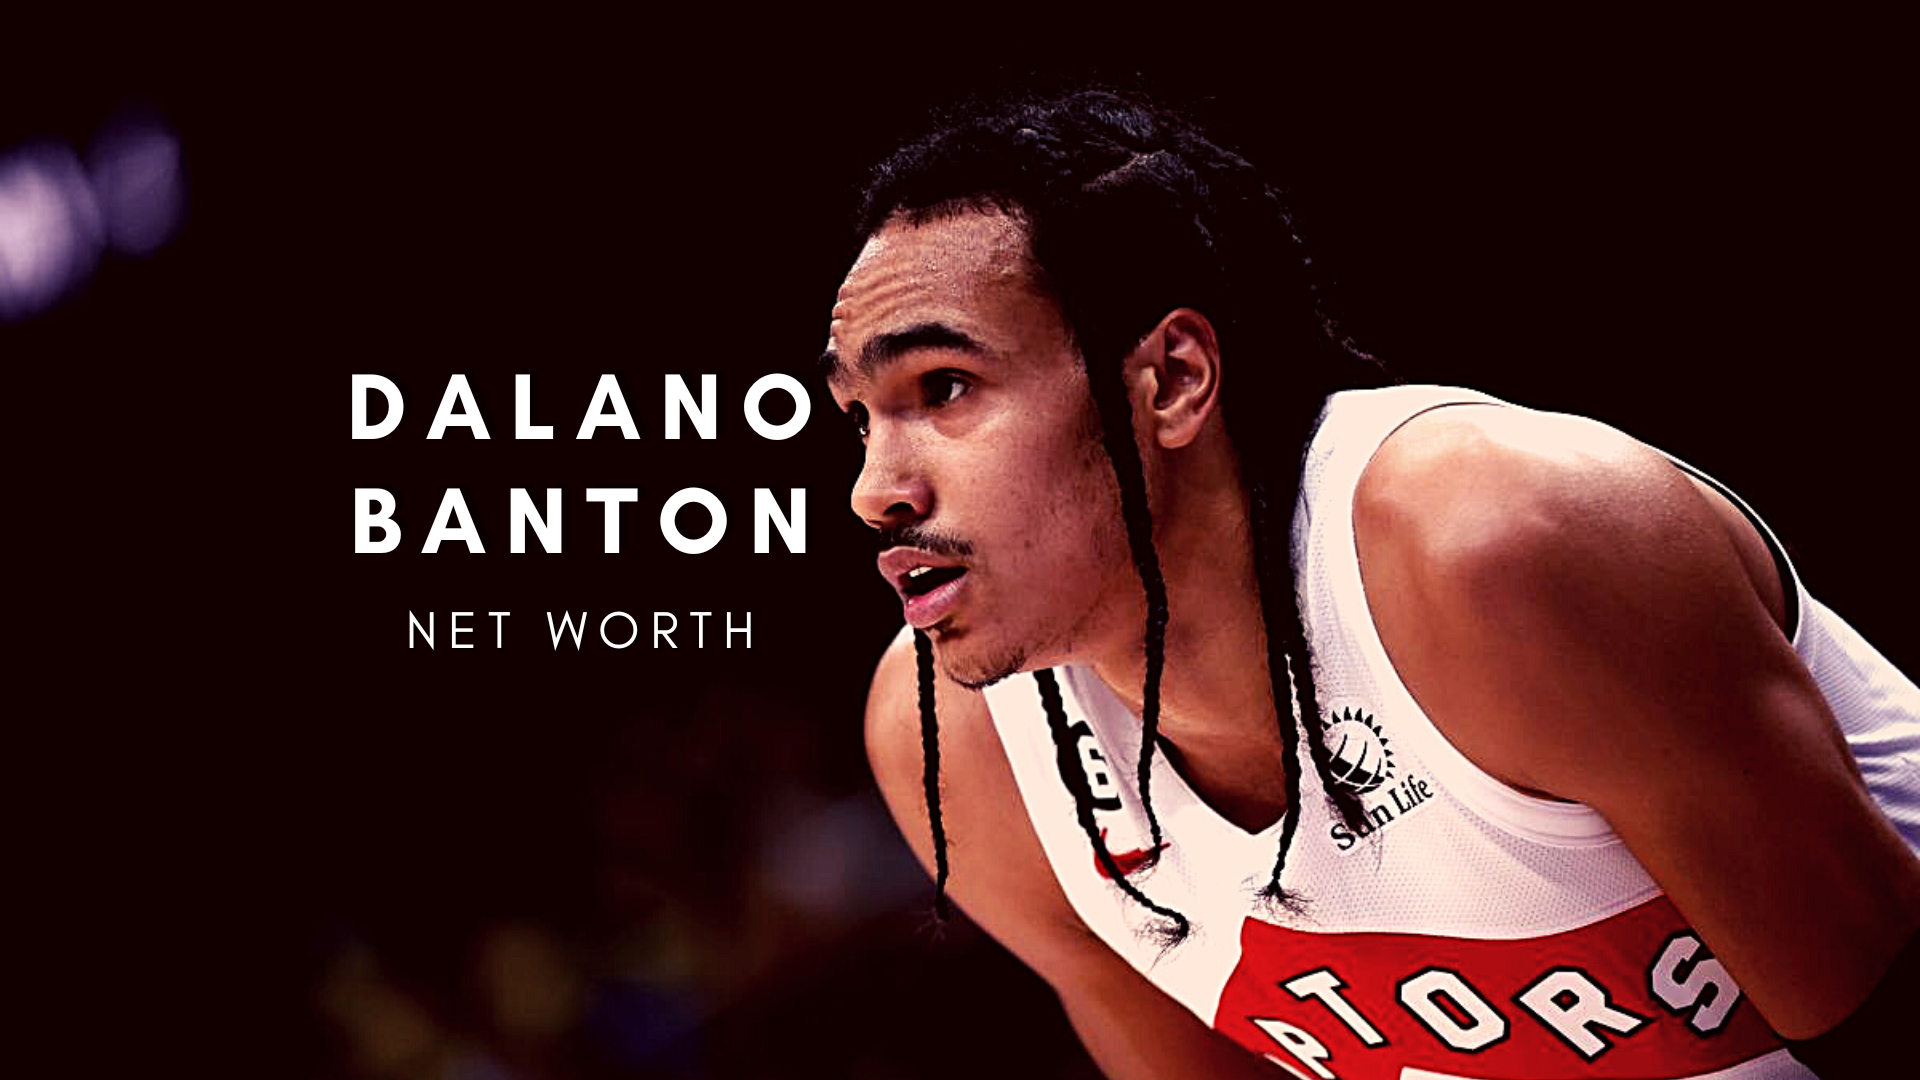 Dalano Banton 2022 - Net Worth, Salary, Career, and Personal Life